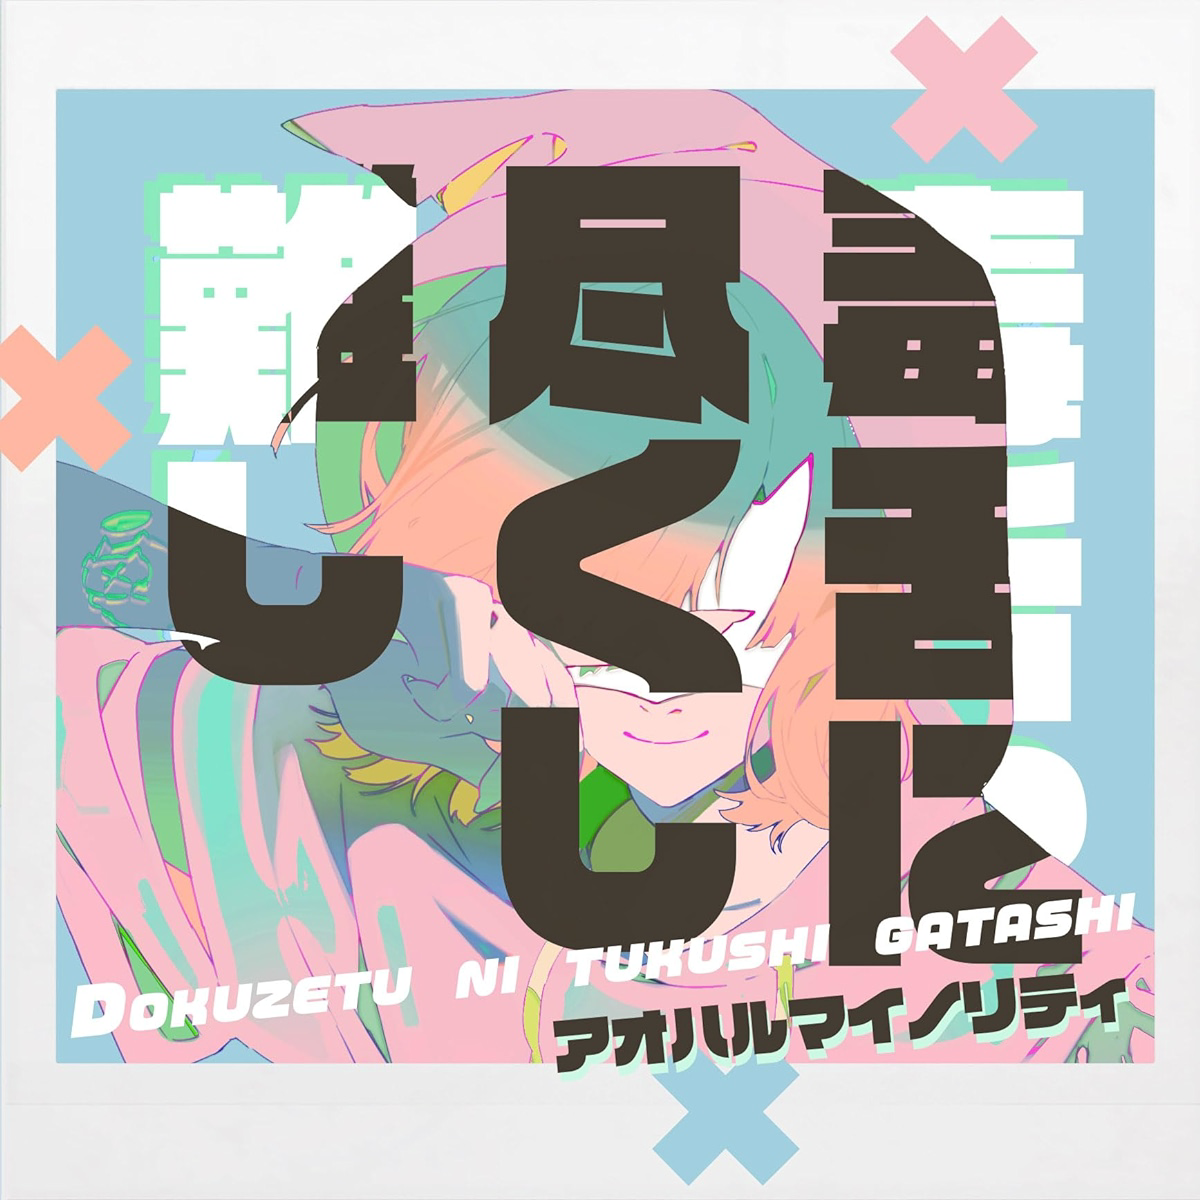 NARLOW - Dokuzetsuni Tsukushigatashi Cover